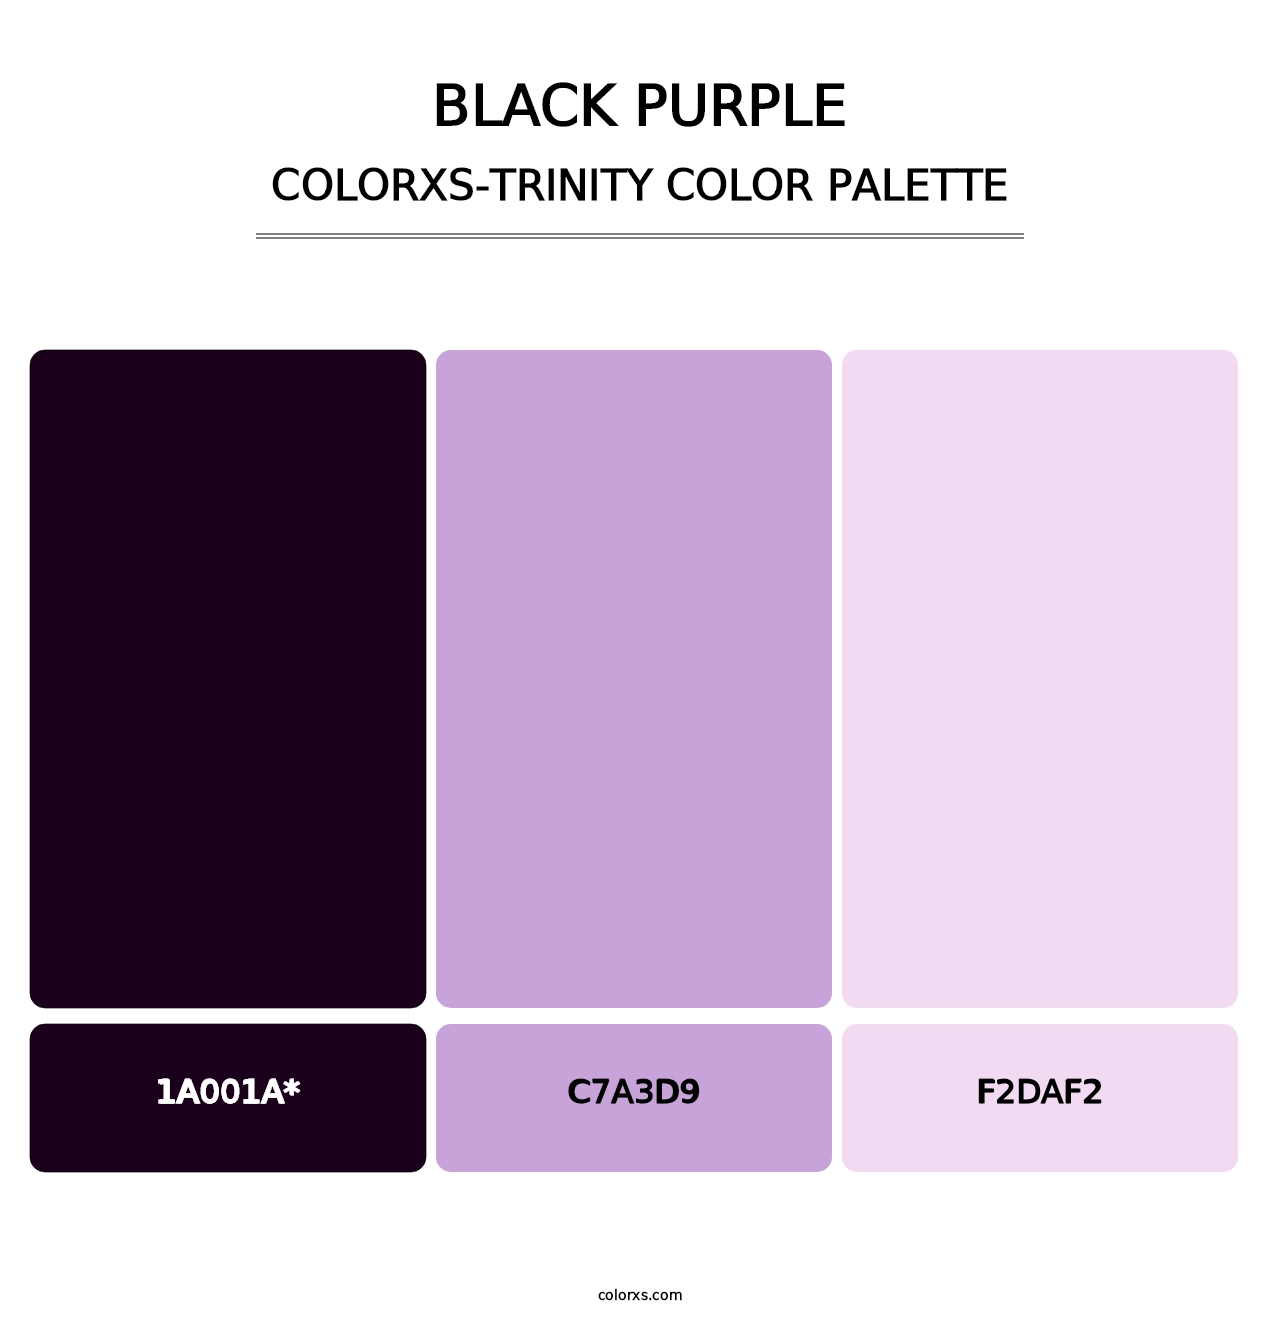 Black Purple - Colorxs Trinity Palette